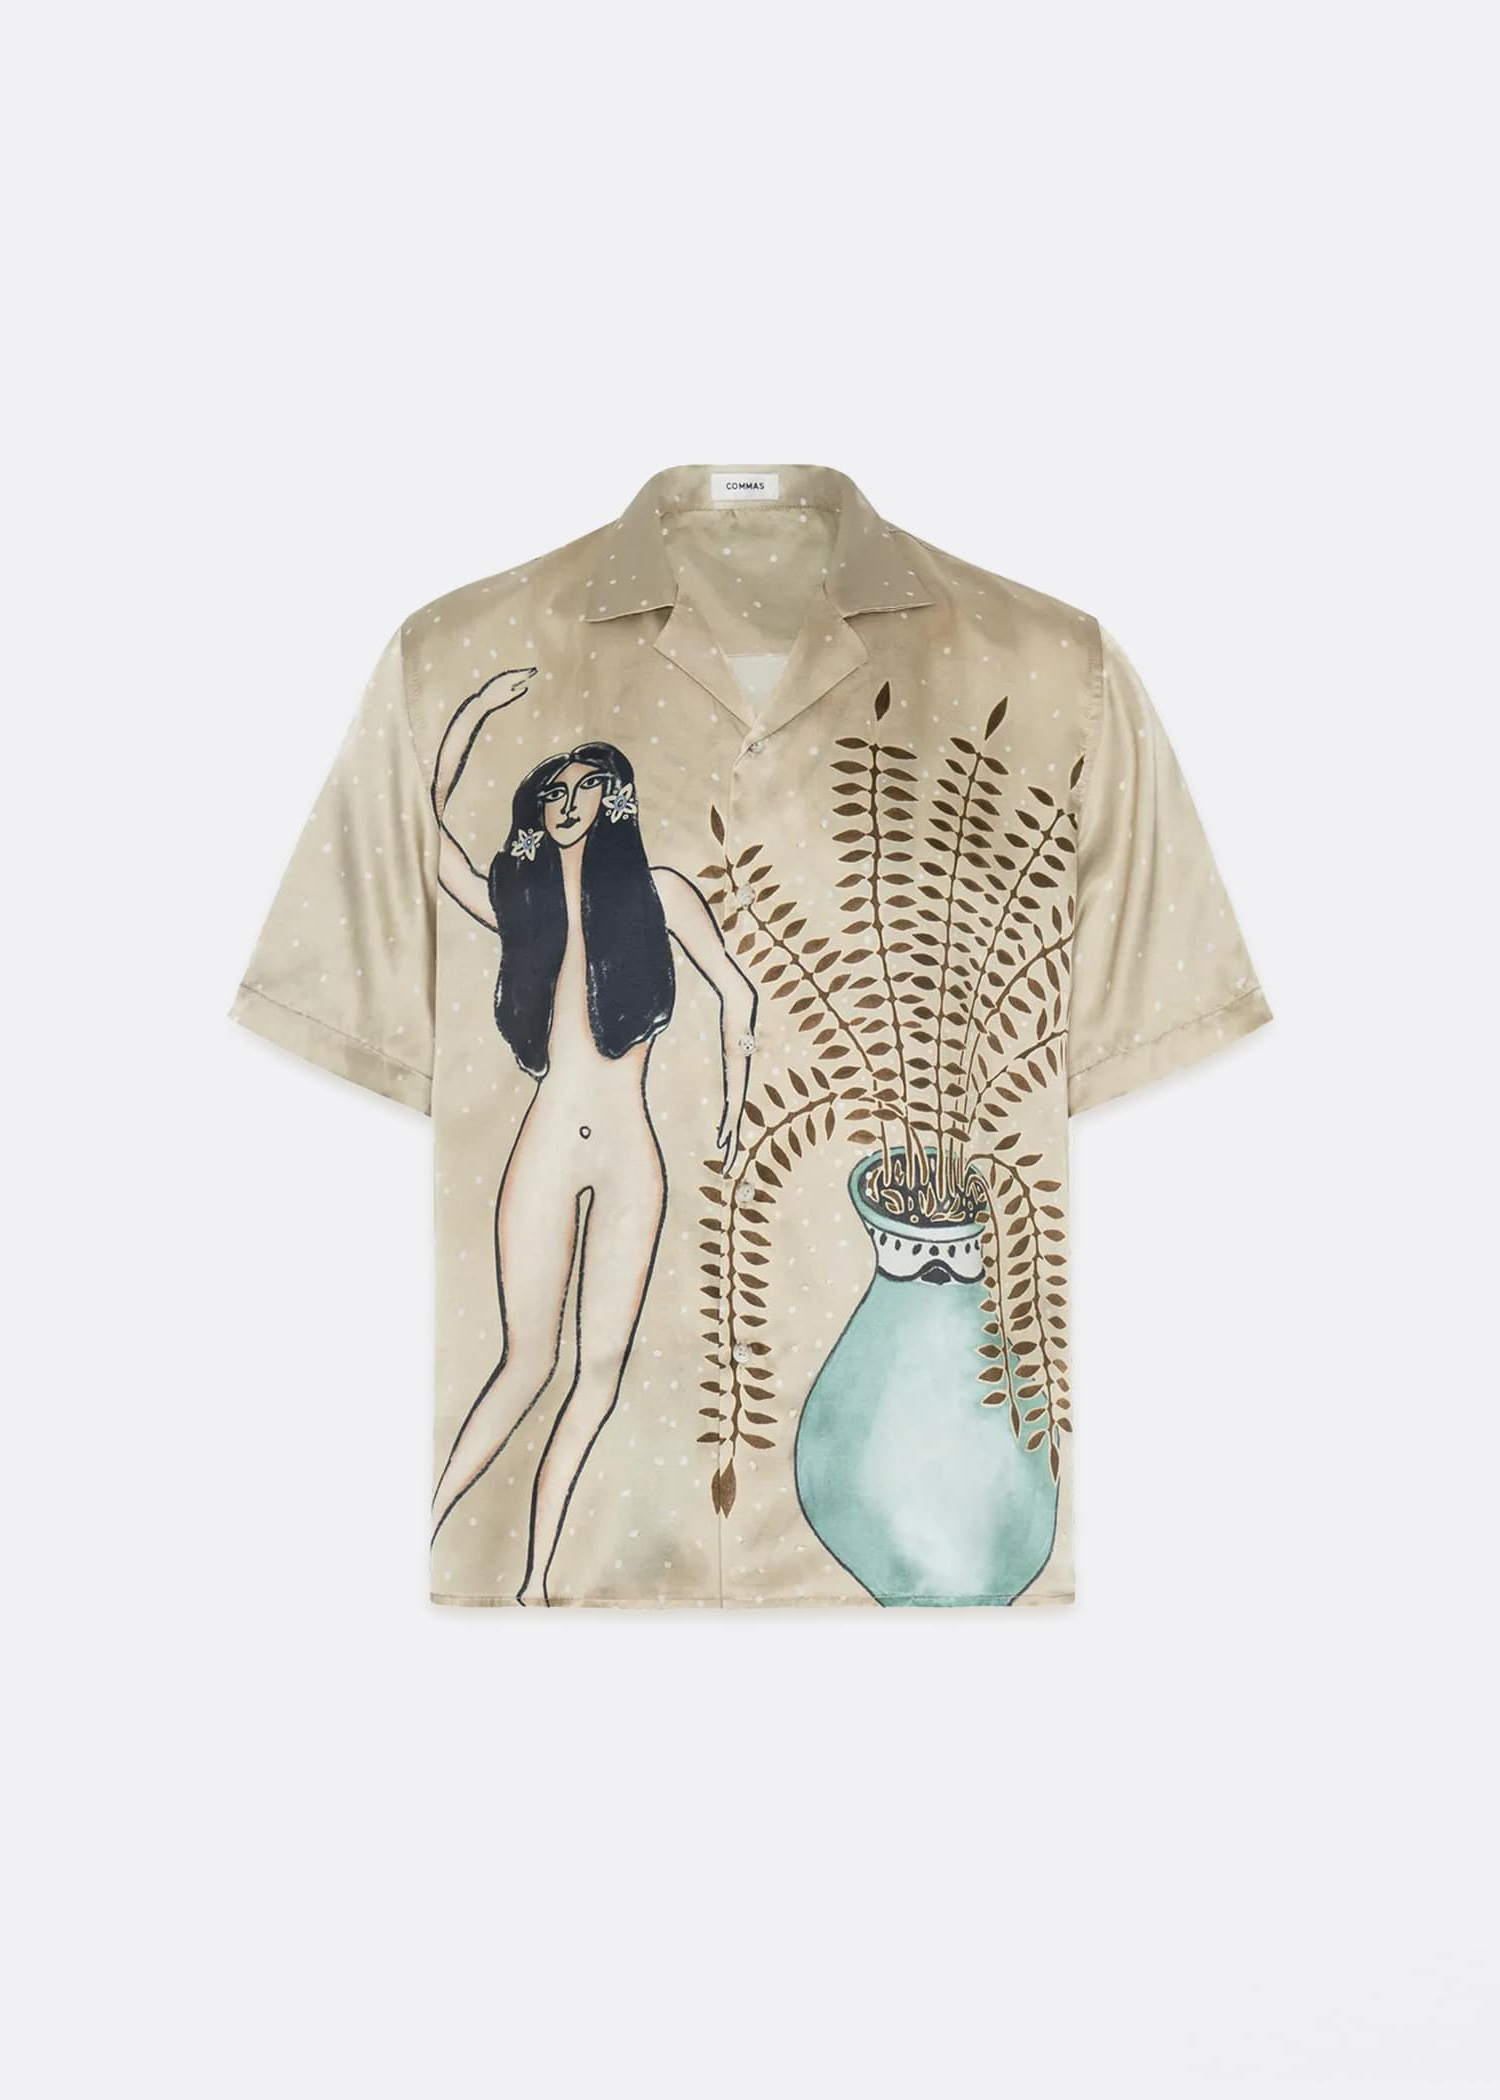 COMMAS 'Woman And Fern' Silk Shirt